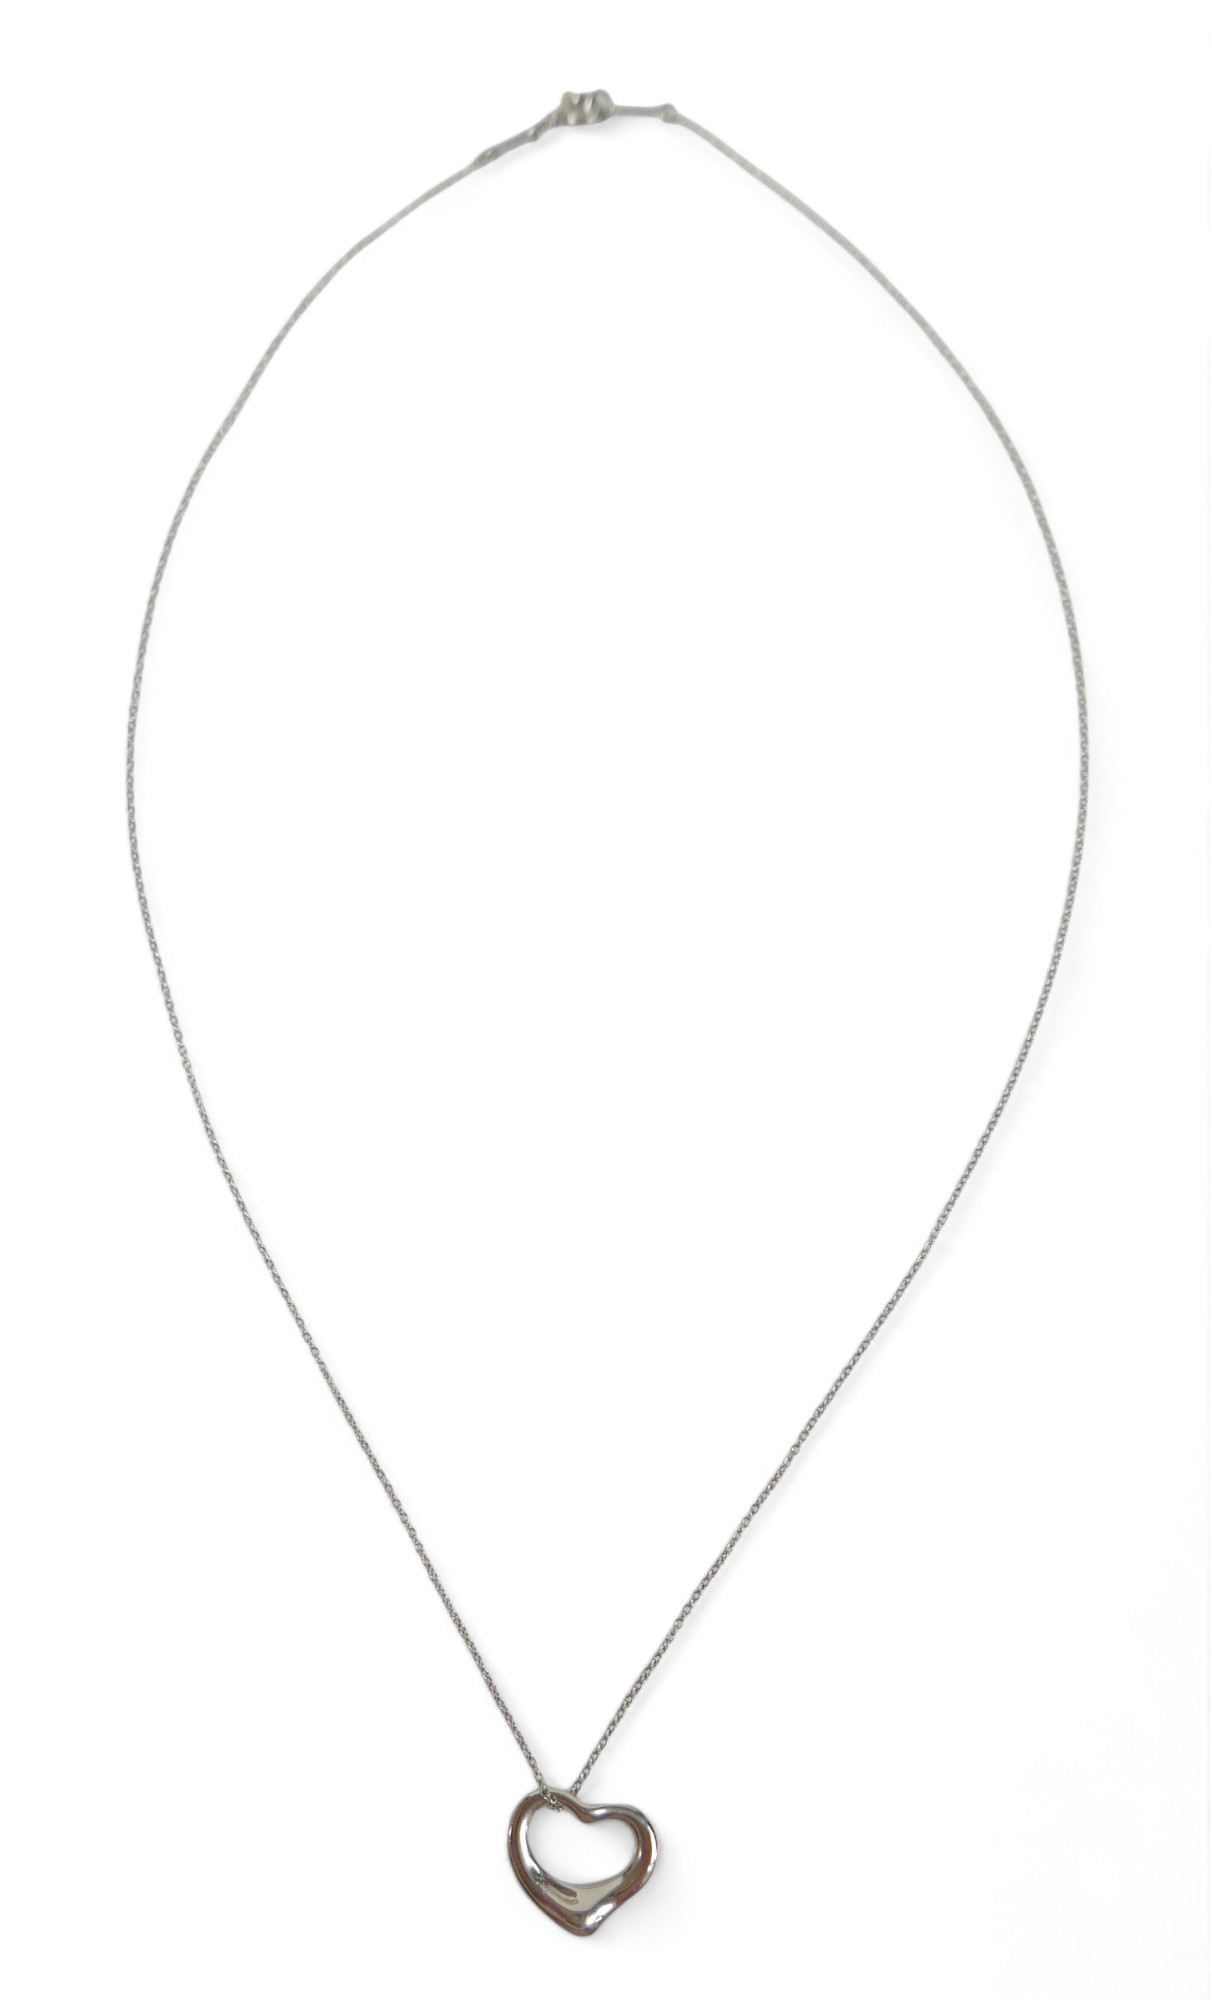 A Tiffany & Co 950 platinium Peretti heart pendant and chain, total 5.4 grams, 45cm chain. - Image 2 of 6